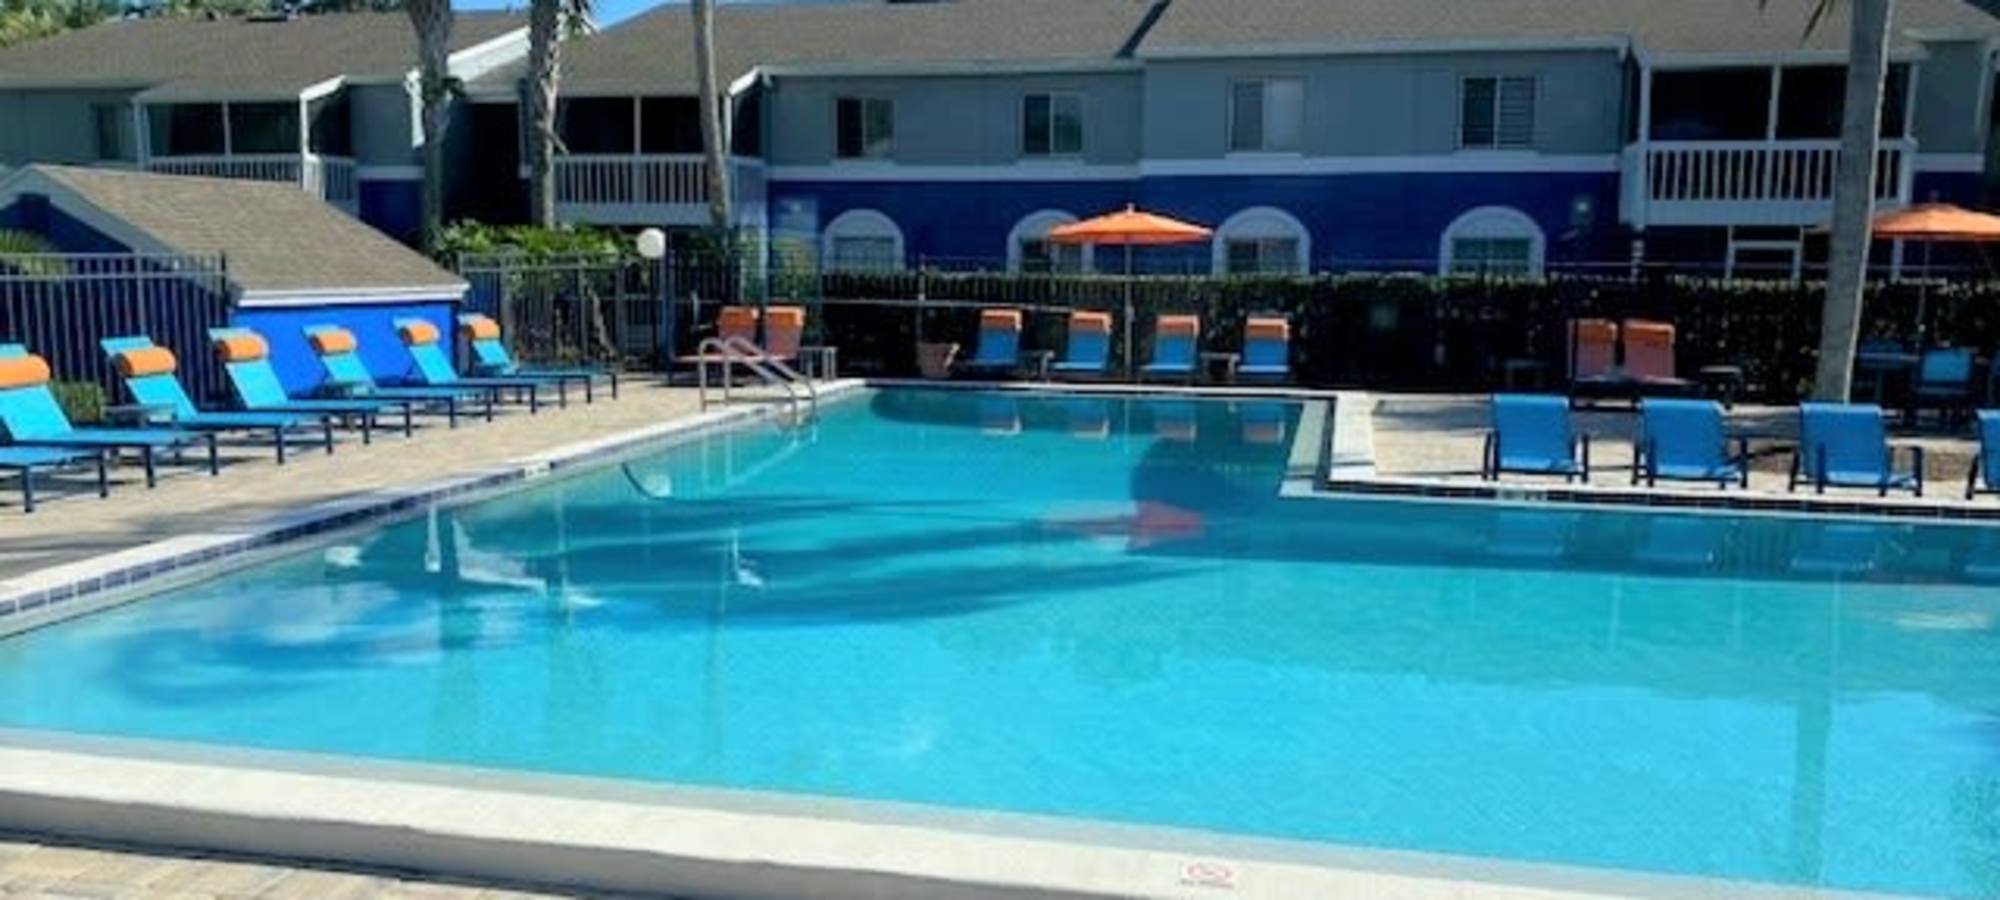 on-site sparkling pool at Latitude 28 in Altamonte Springs, Florida